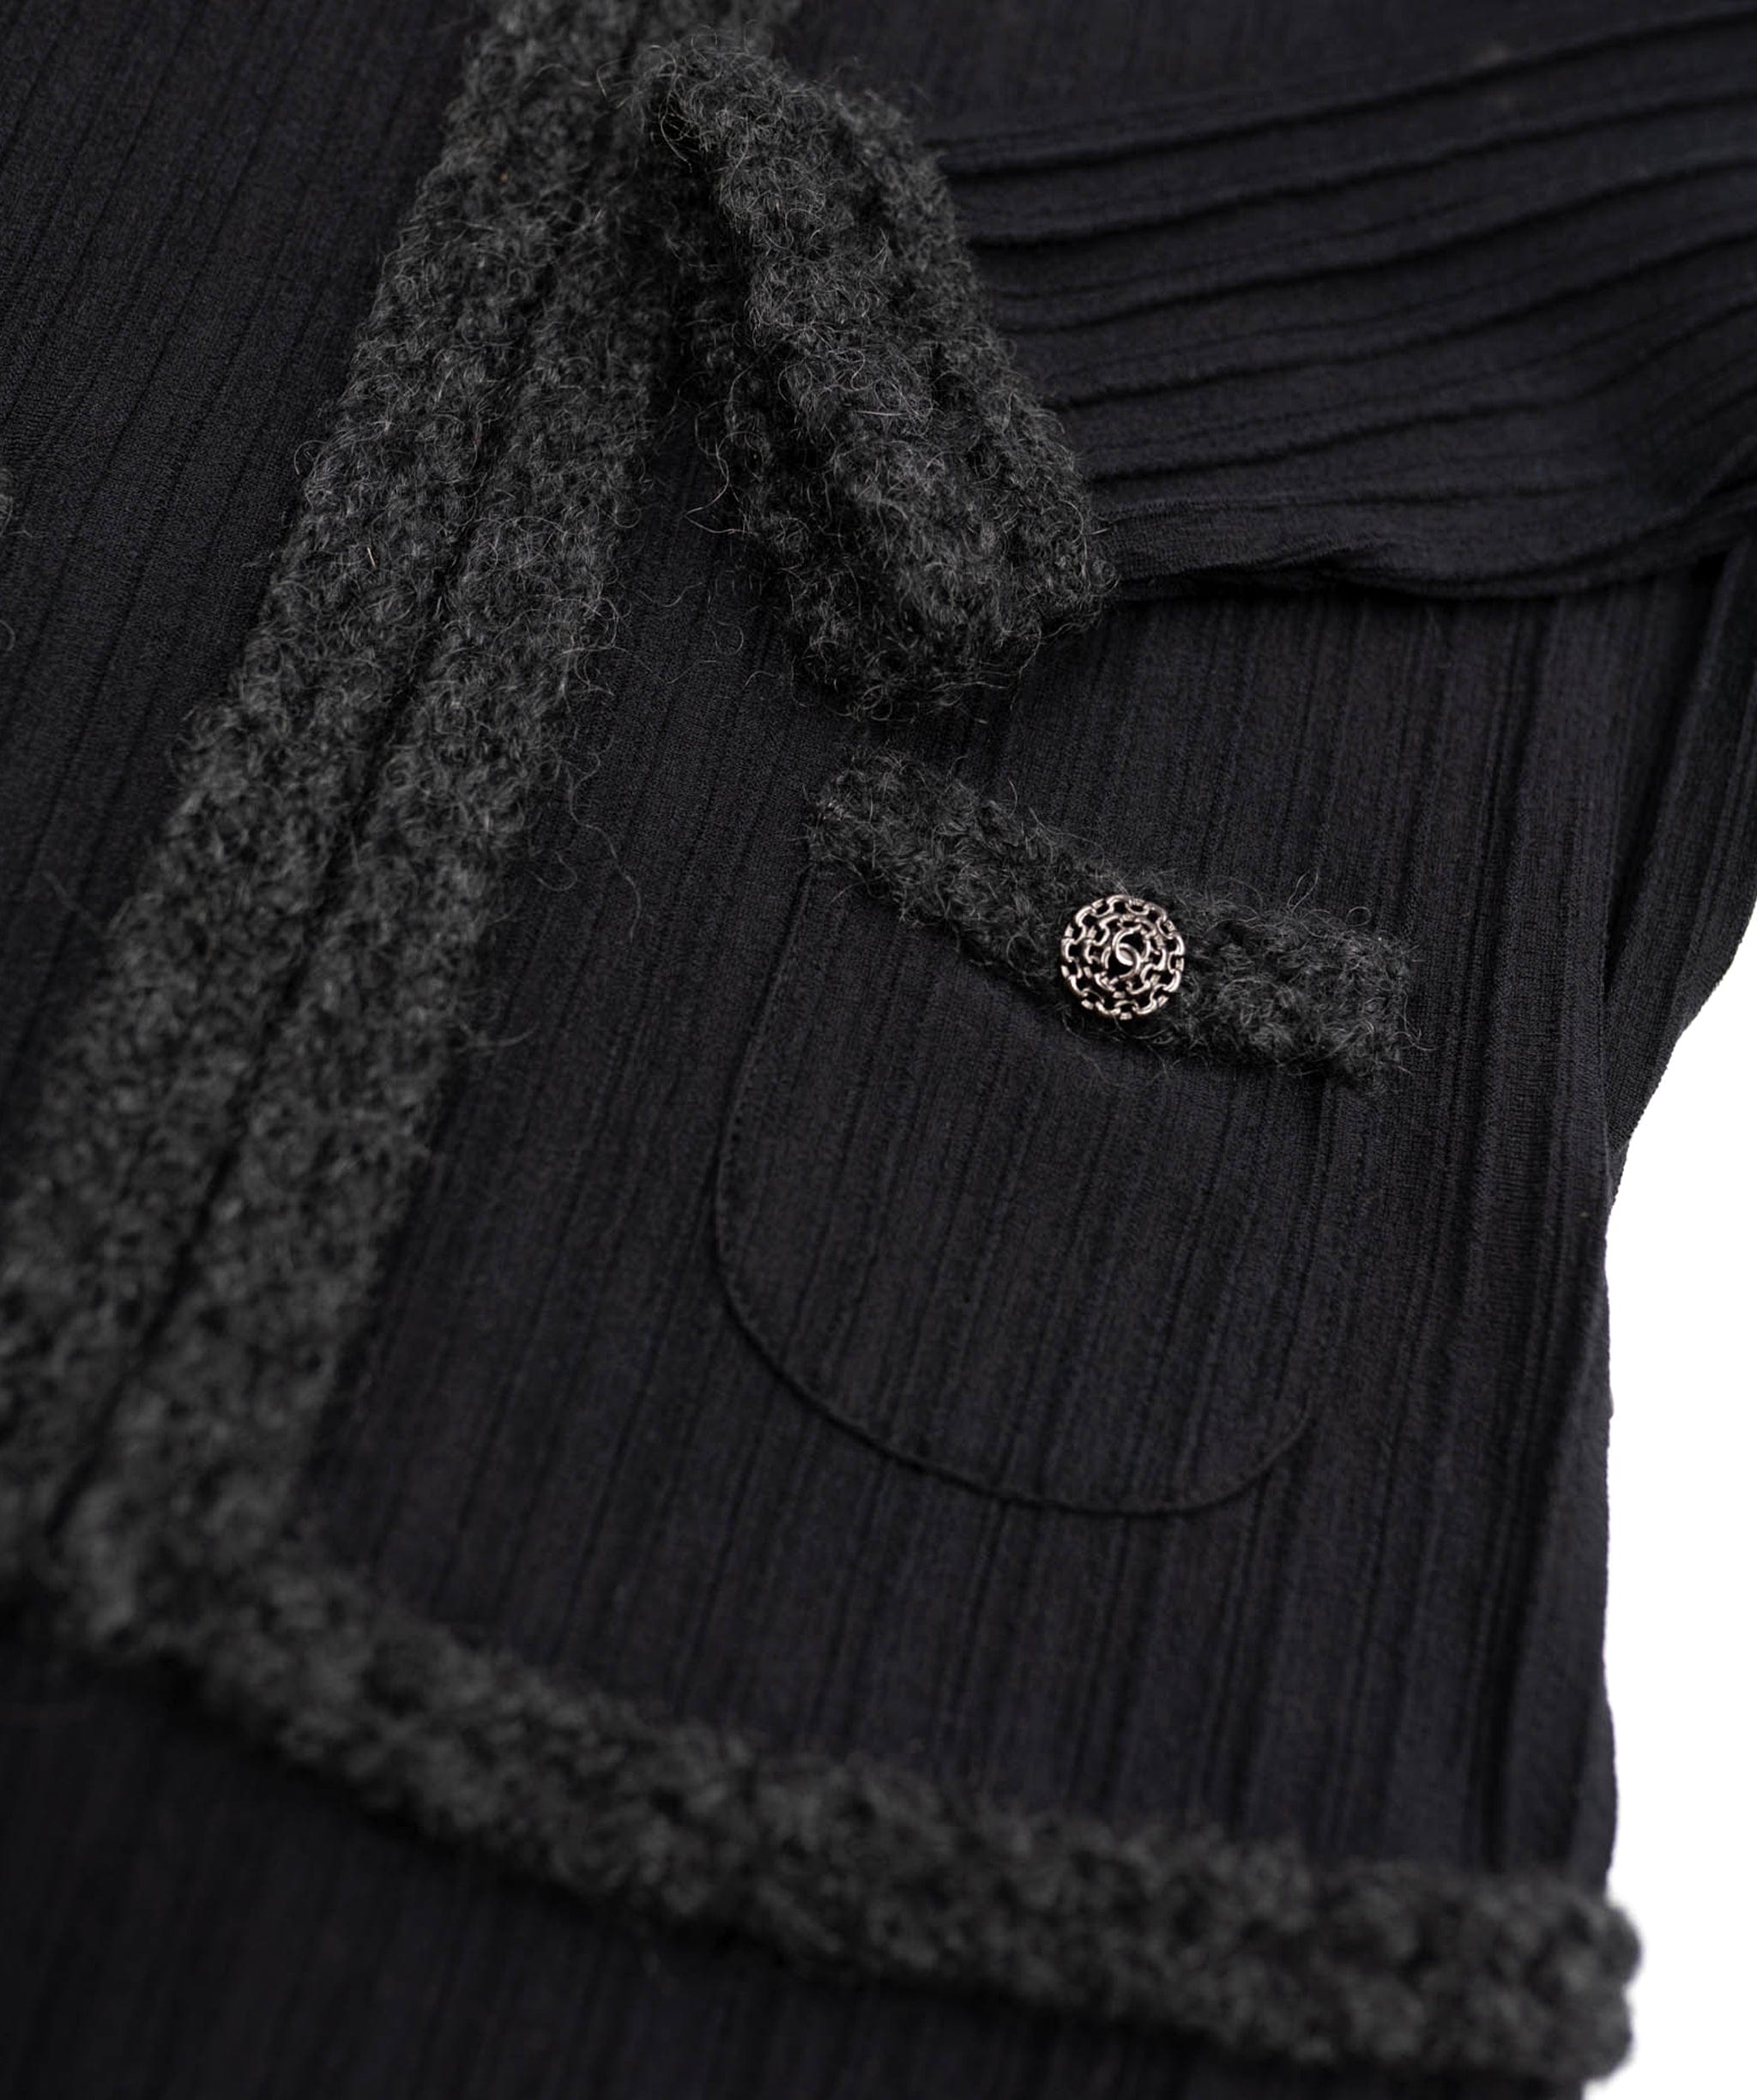 Chanel Chanel Trim Knit Dress ASL4607